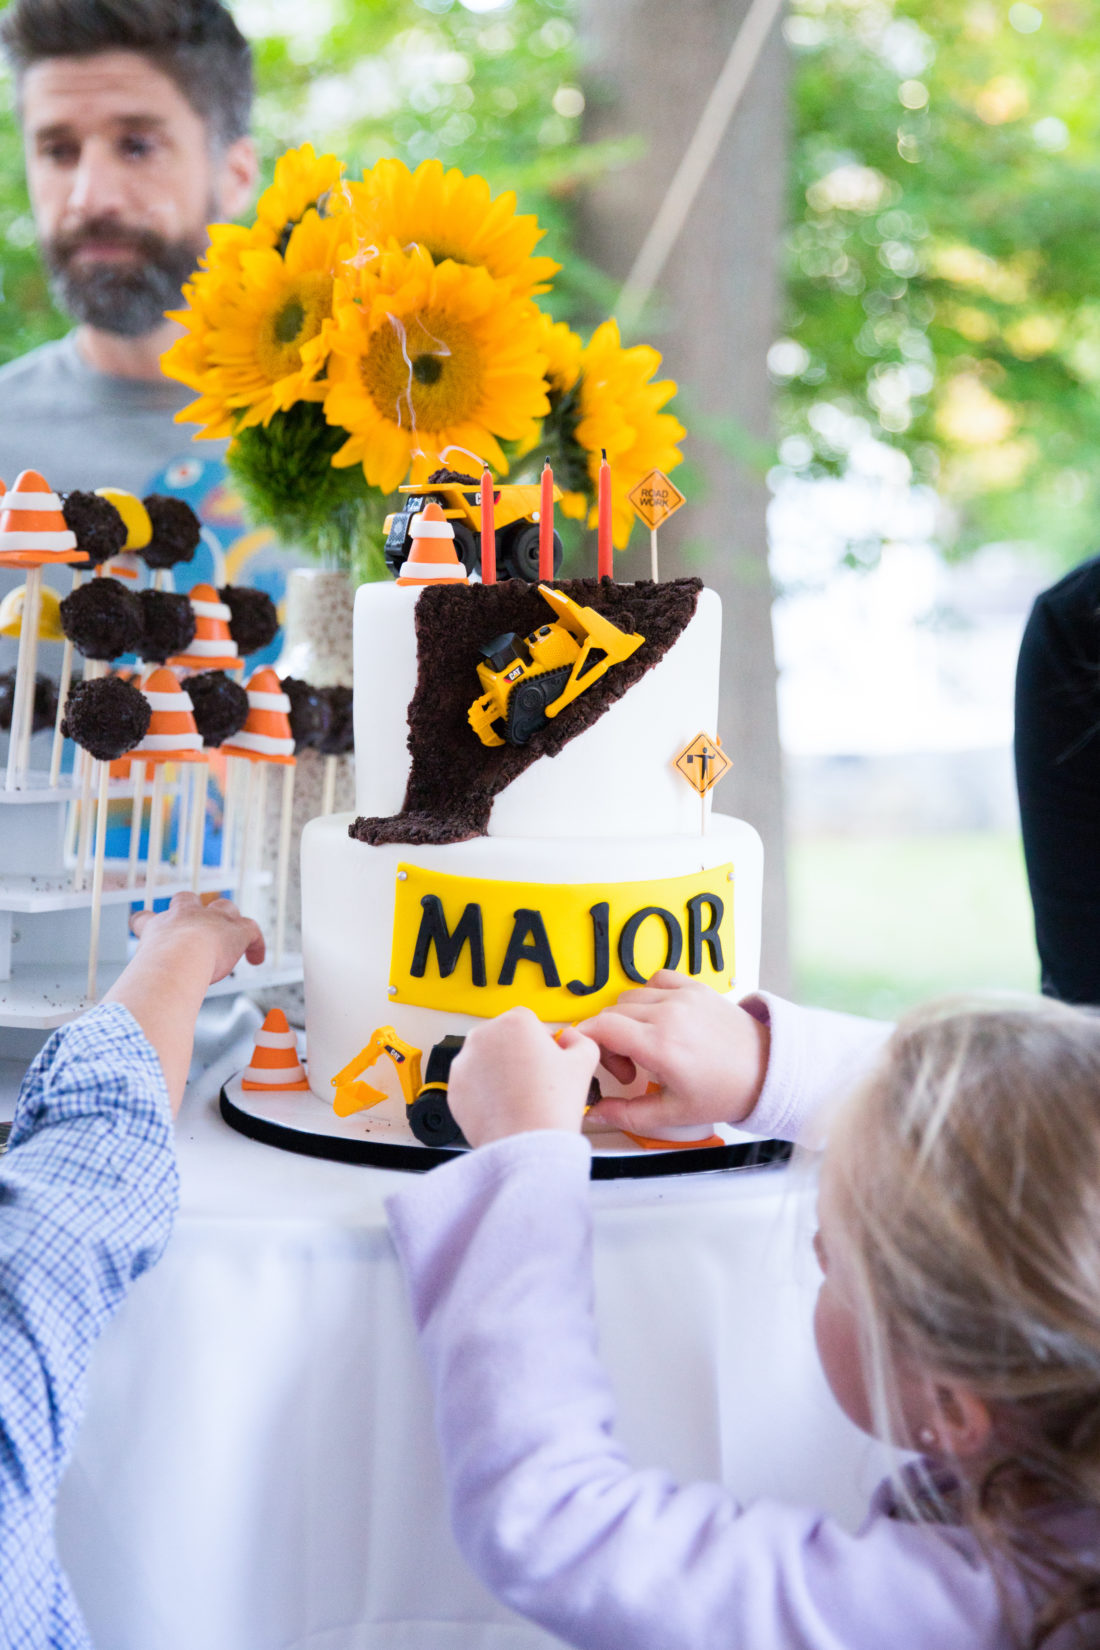 Major Martino's Construction Zone Birthday Cake and Cake Pops